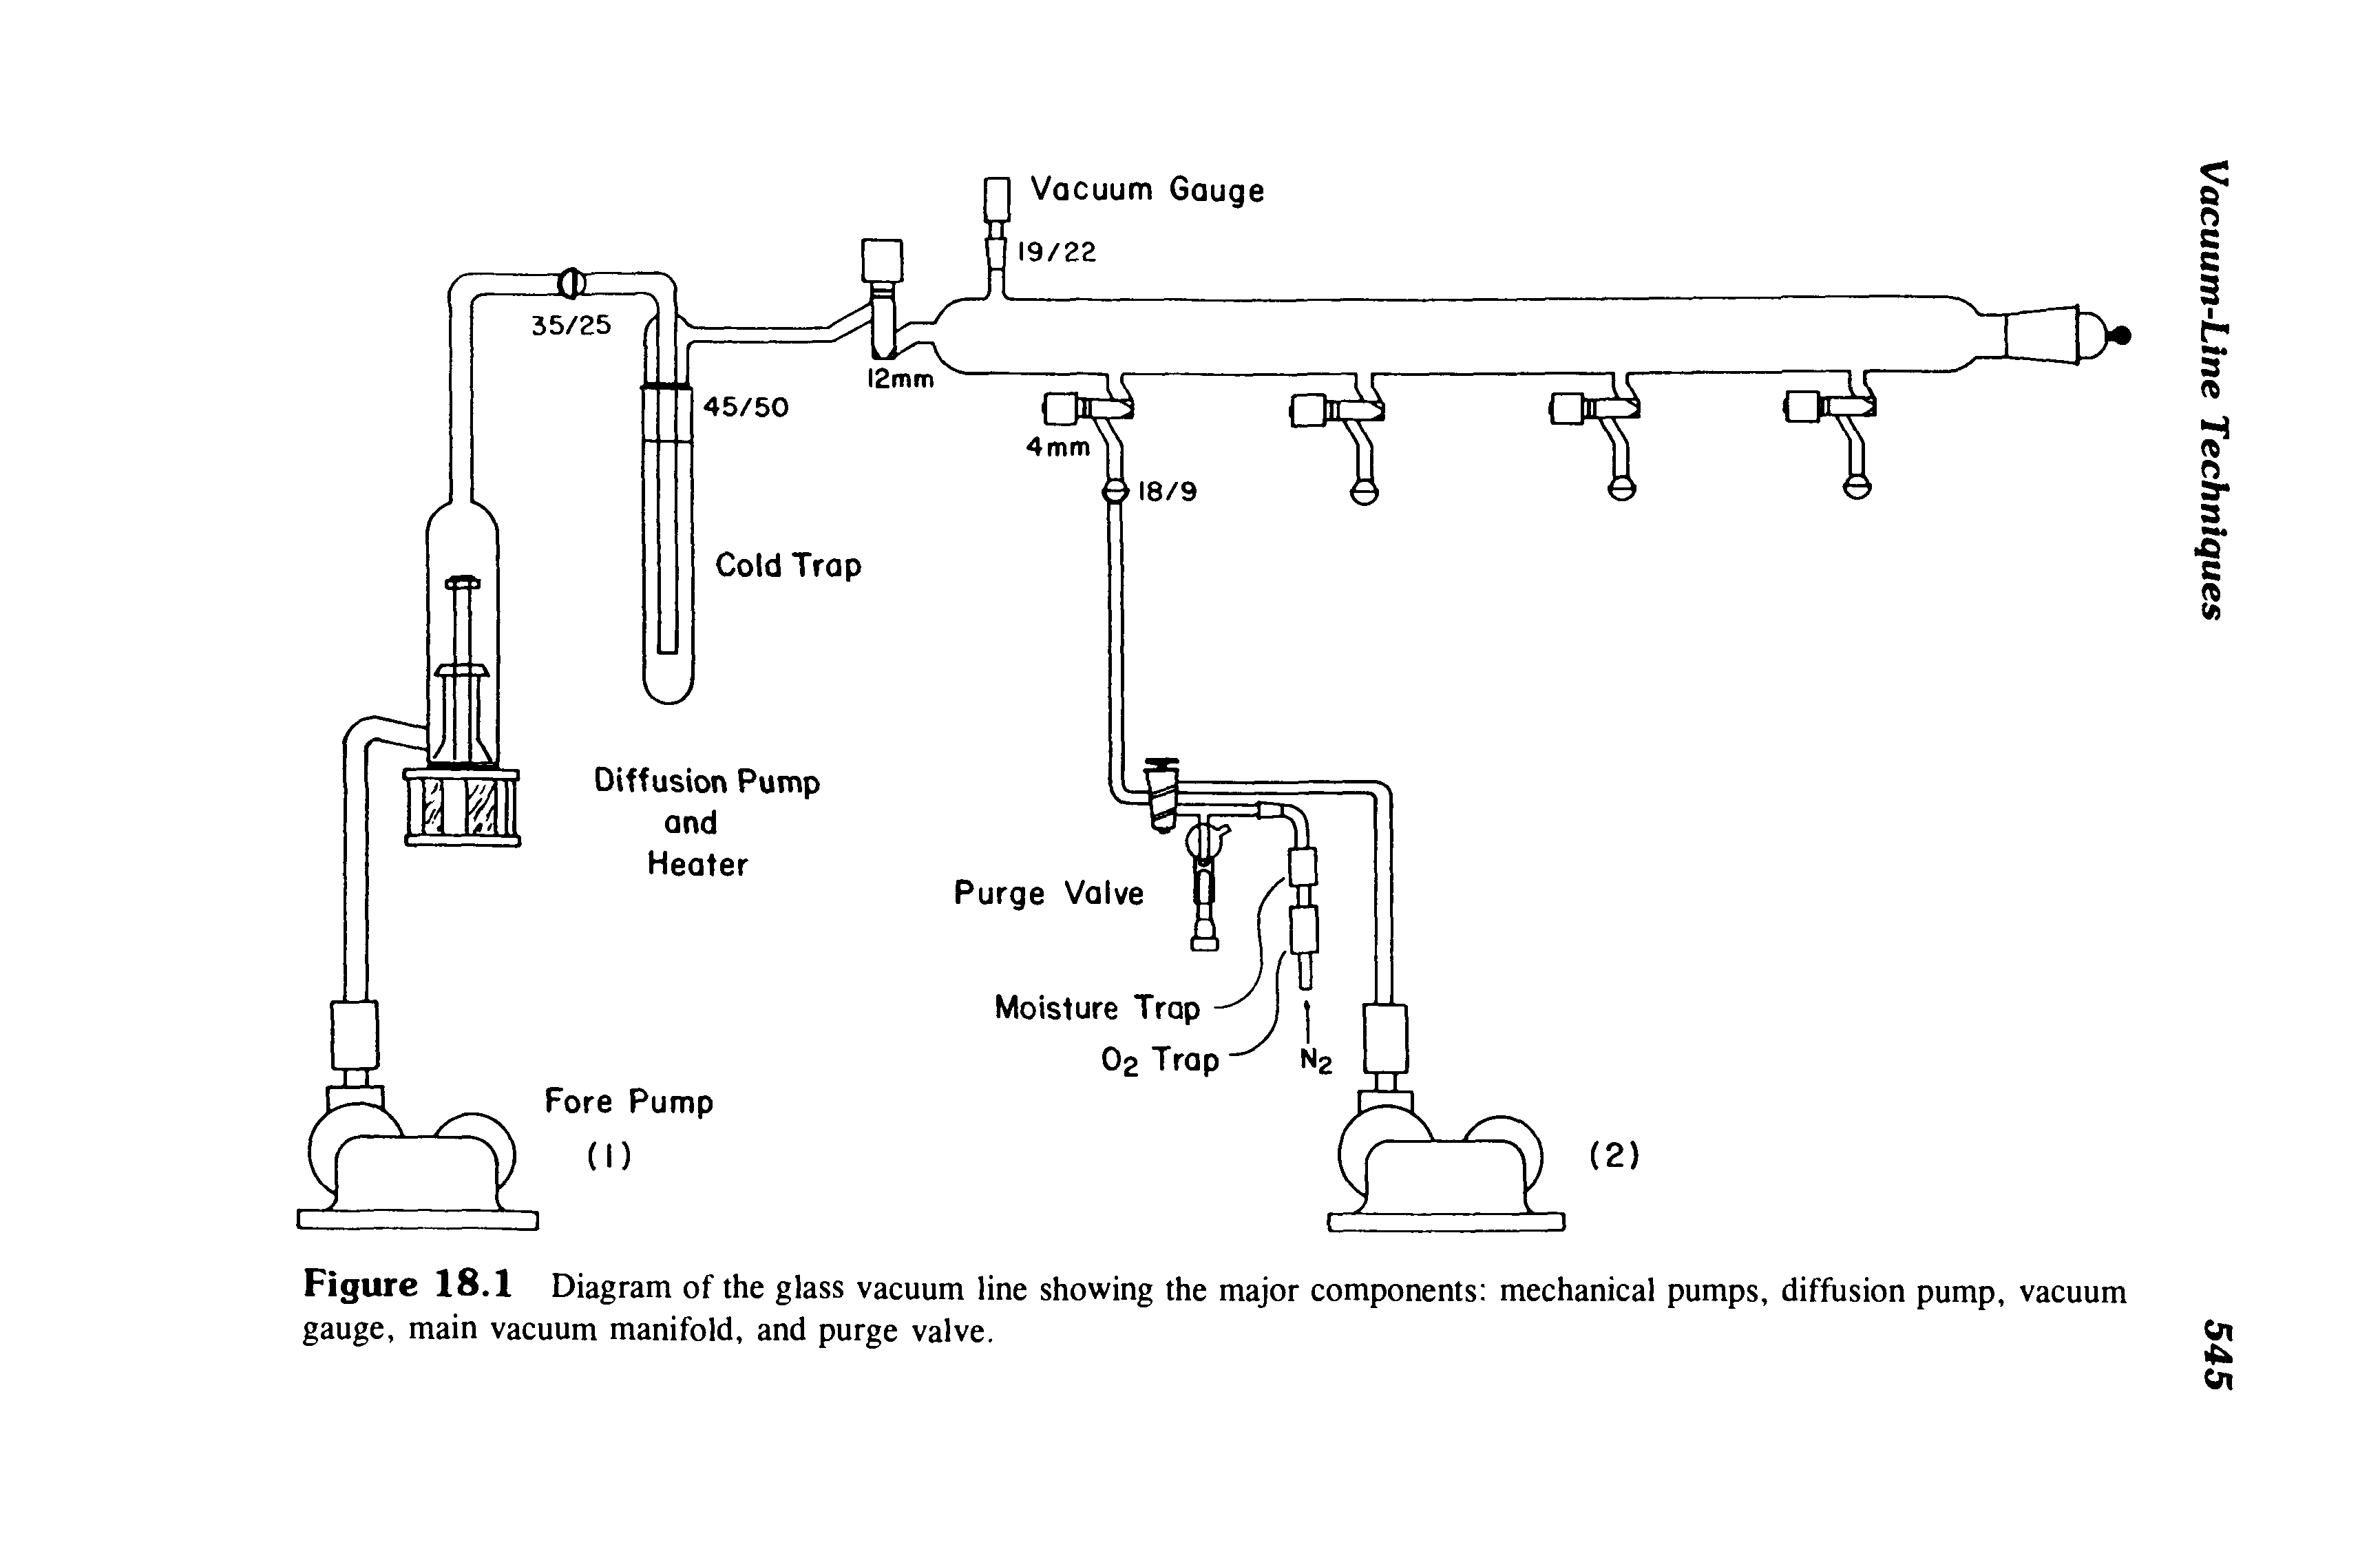 Figure 18.1 Diagram of the glass vacuum line showing the major components mechanical pumps, diffusion pump, vacuum gauge, main vacuum manifold, and purge valve.